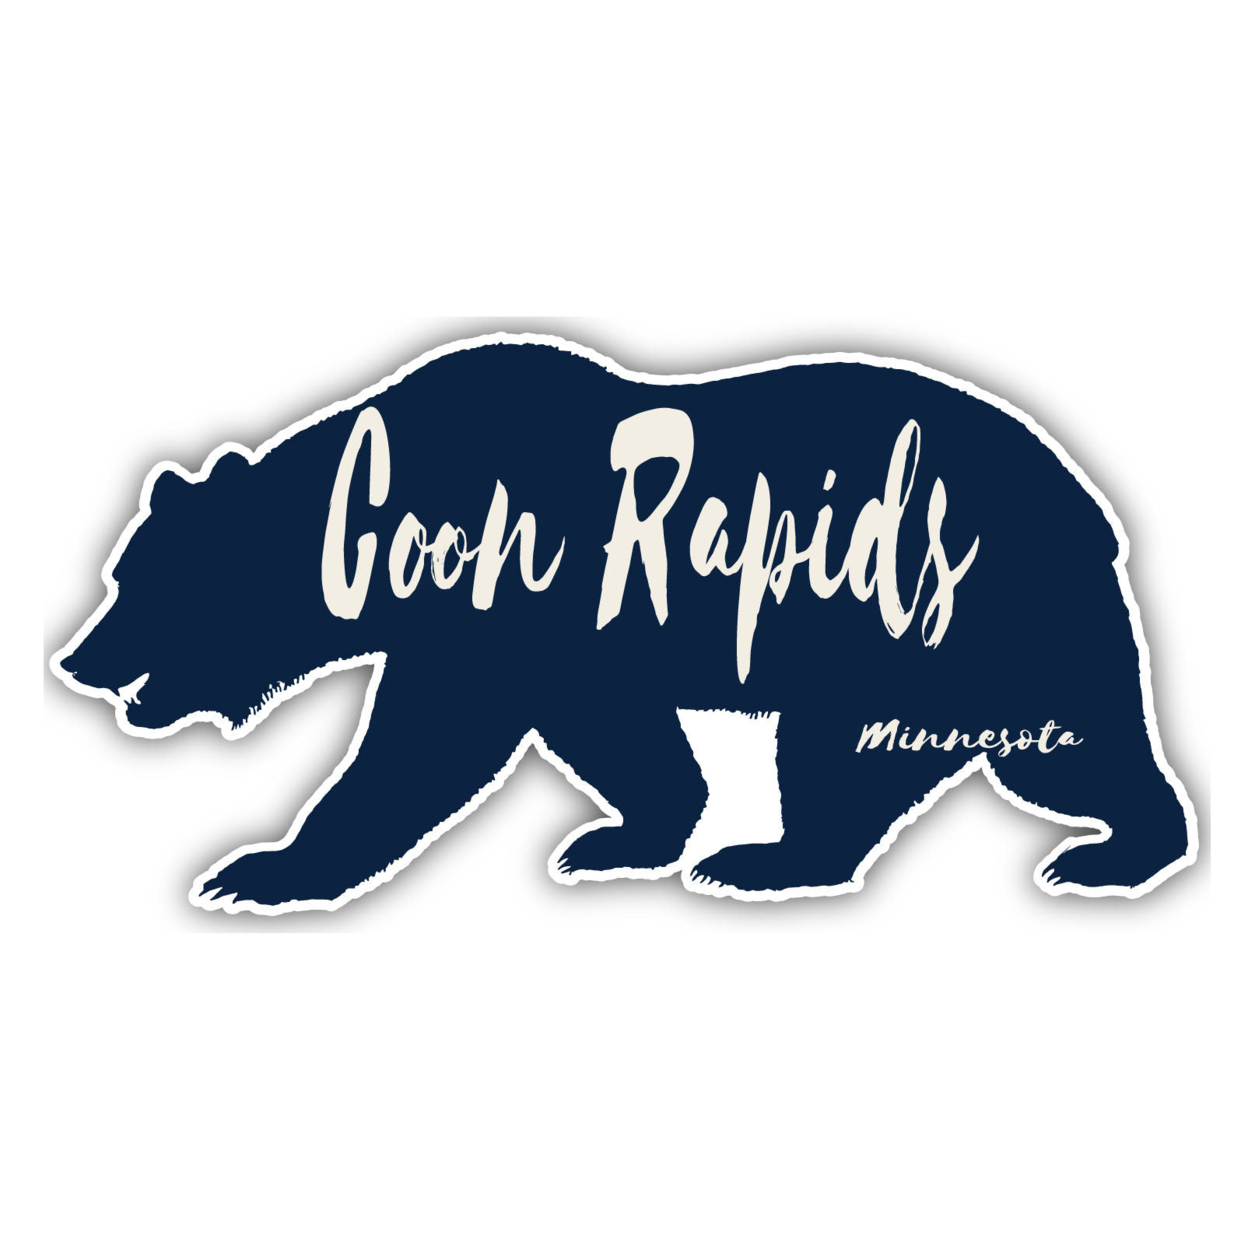 Coon Rapids Minnesota Souvenir Decorative Stickers (Choose Theme And Size) - Single Unit, 10-Inch, Camp Life